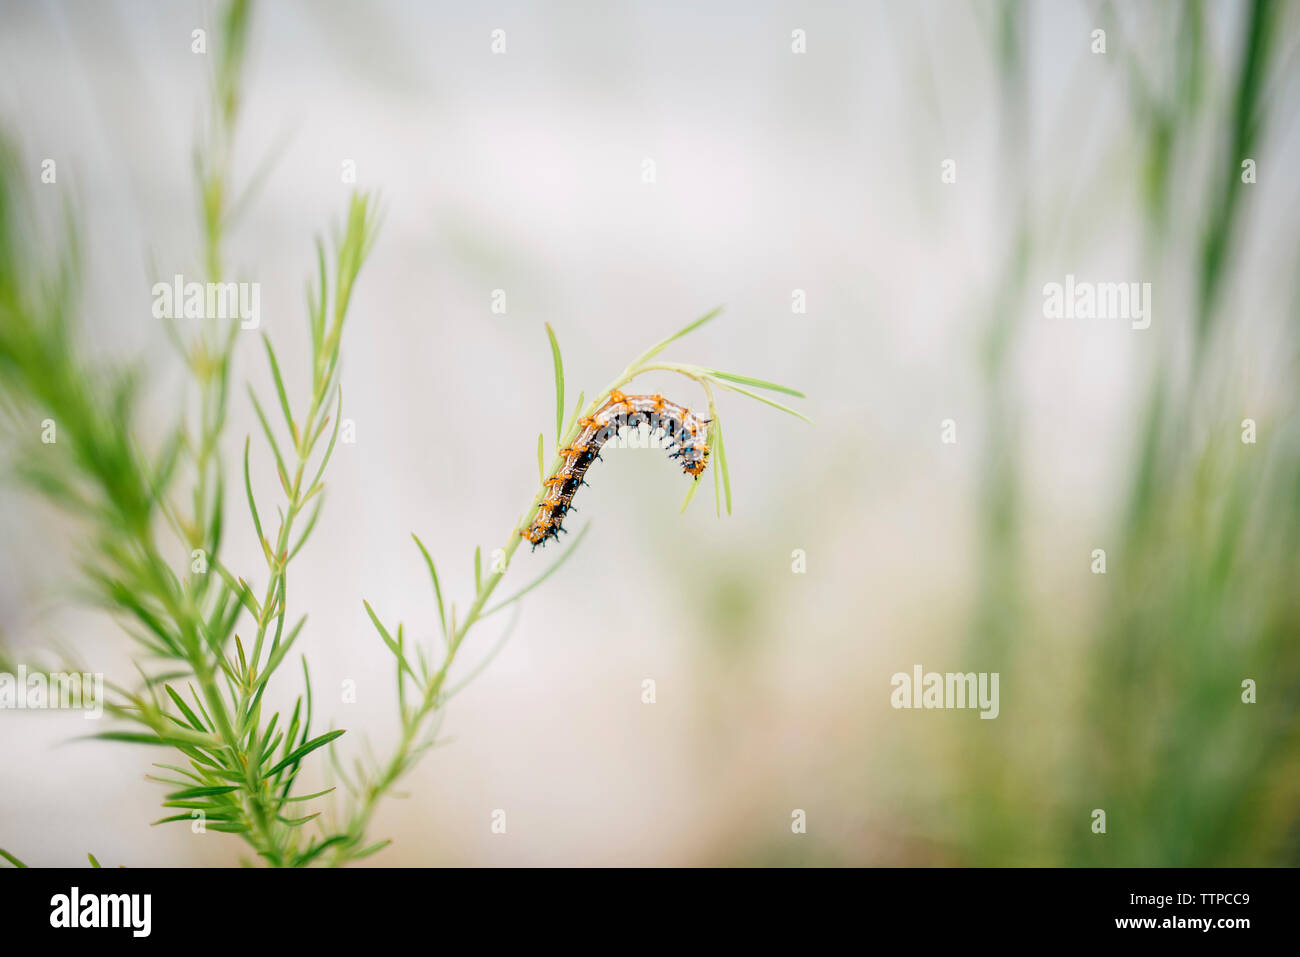 Caterpillar crawling on plant stem Stock Photo